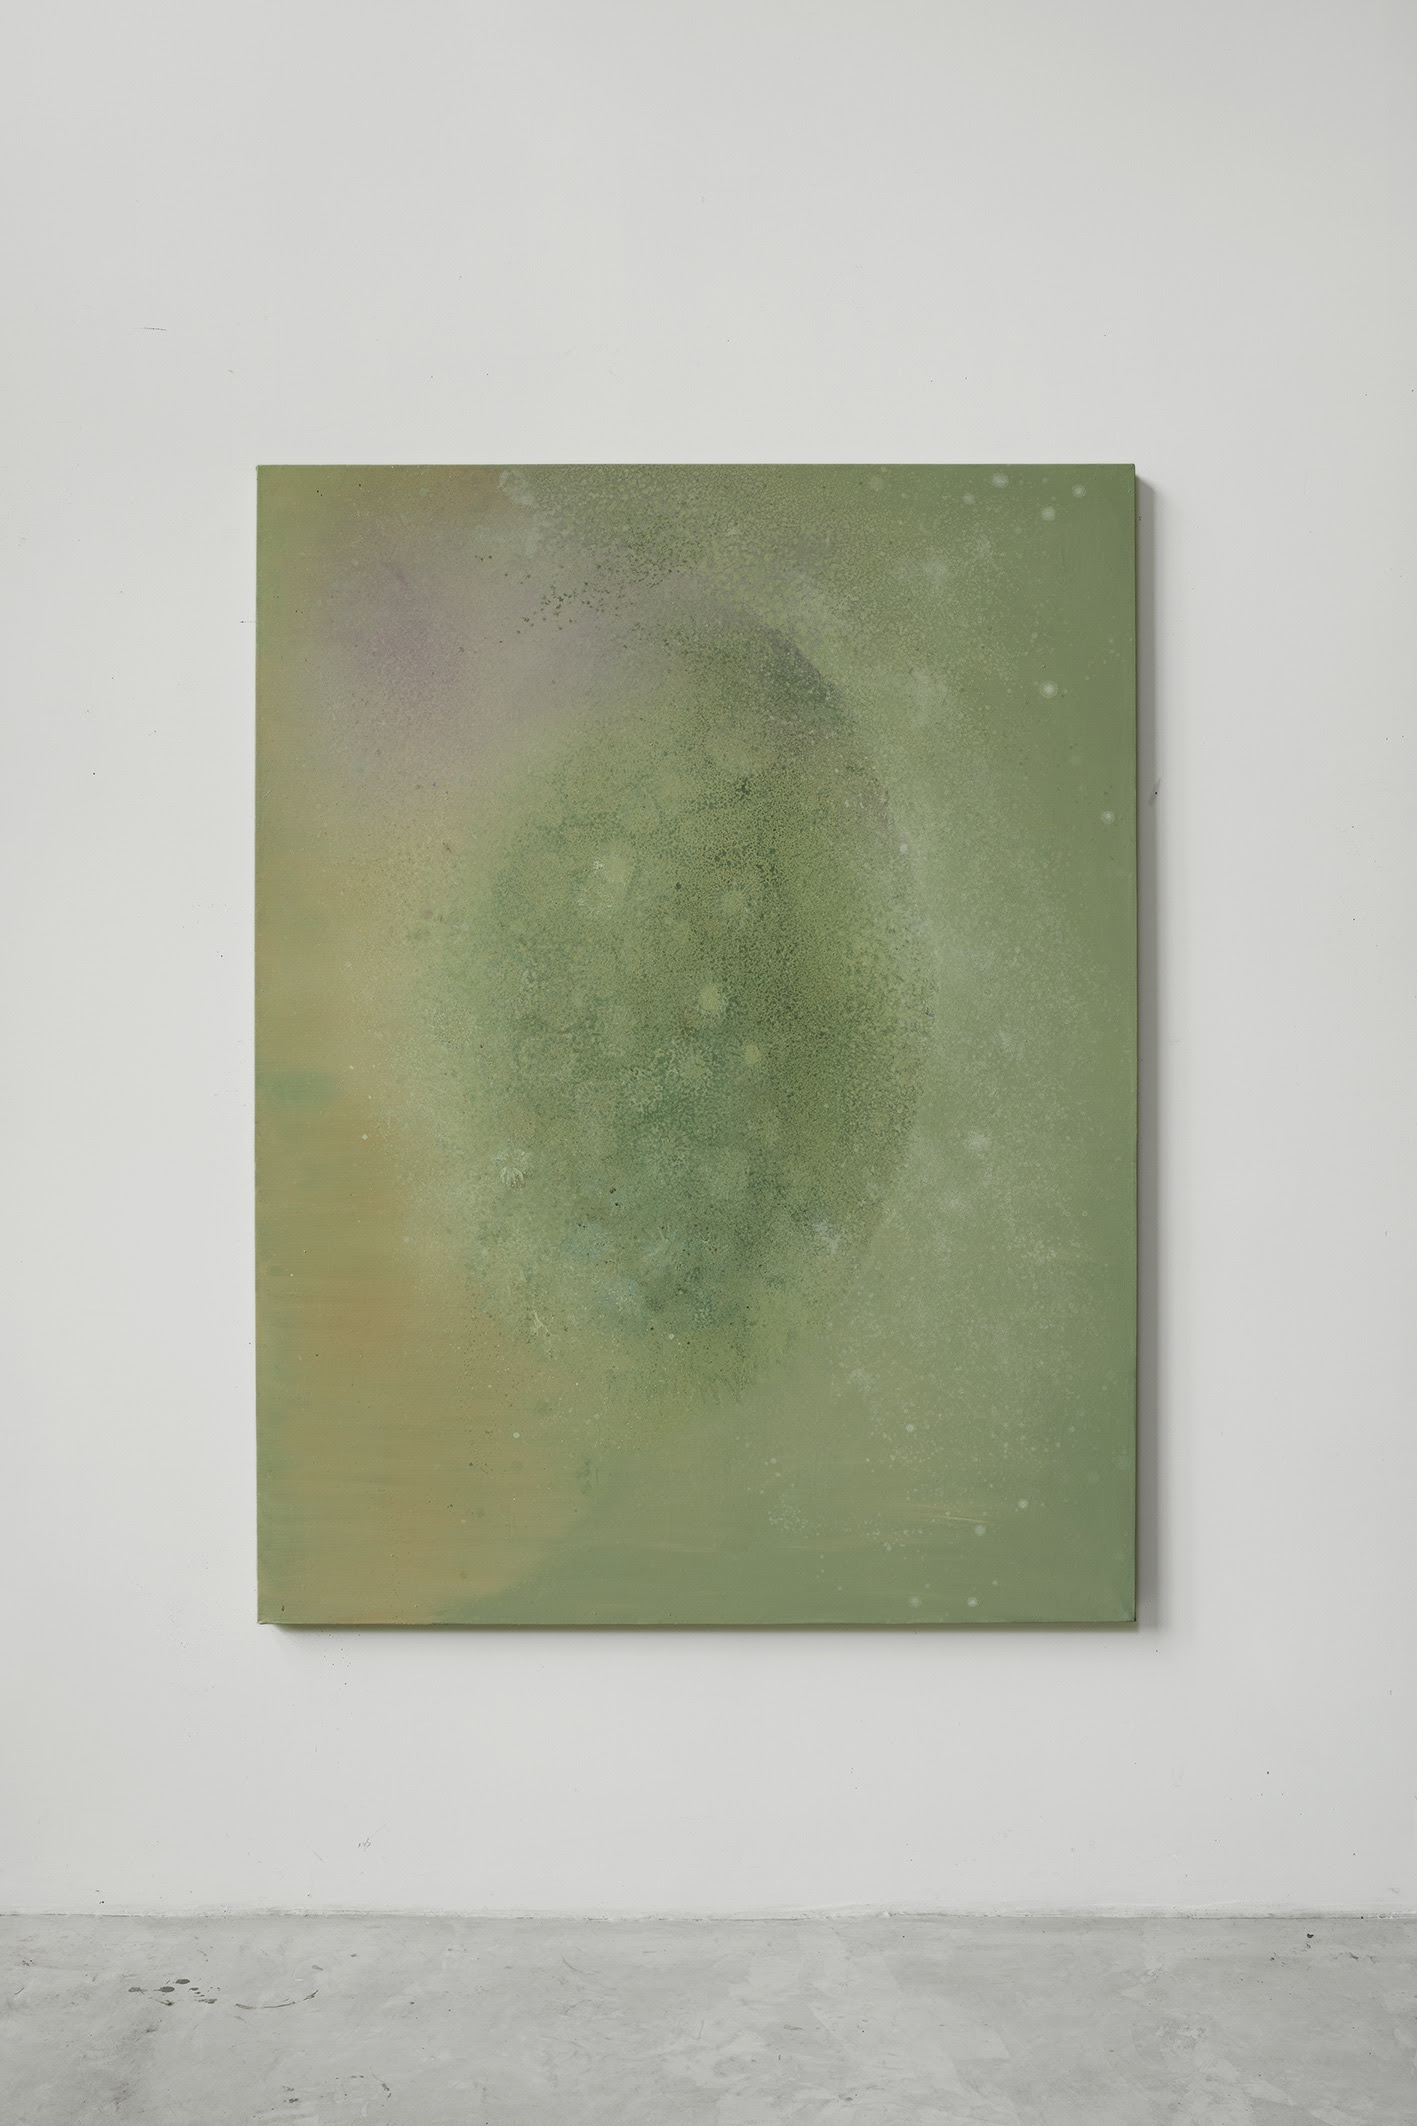 Fabio Marullo, Nebula, 2019, olio su lino, 180 x 135 x 3,5 cm, Ph. Francesco Pizzo